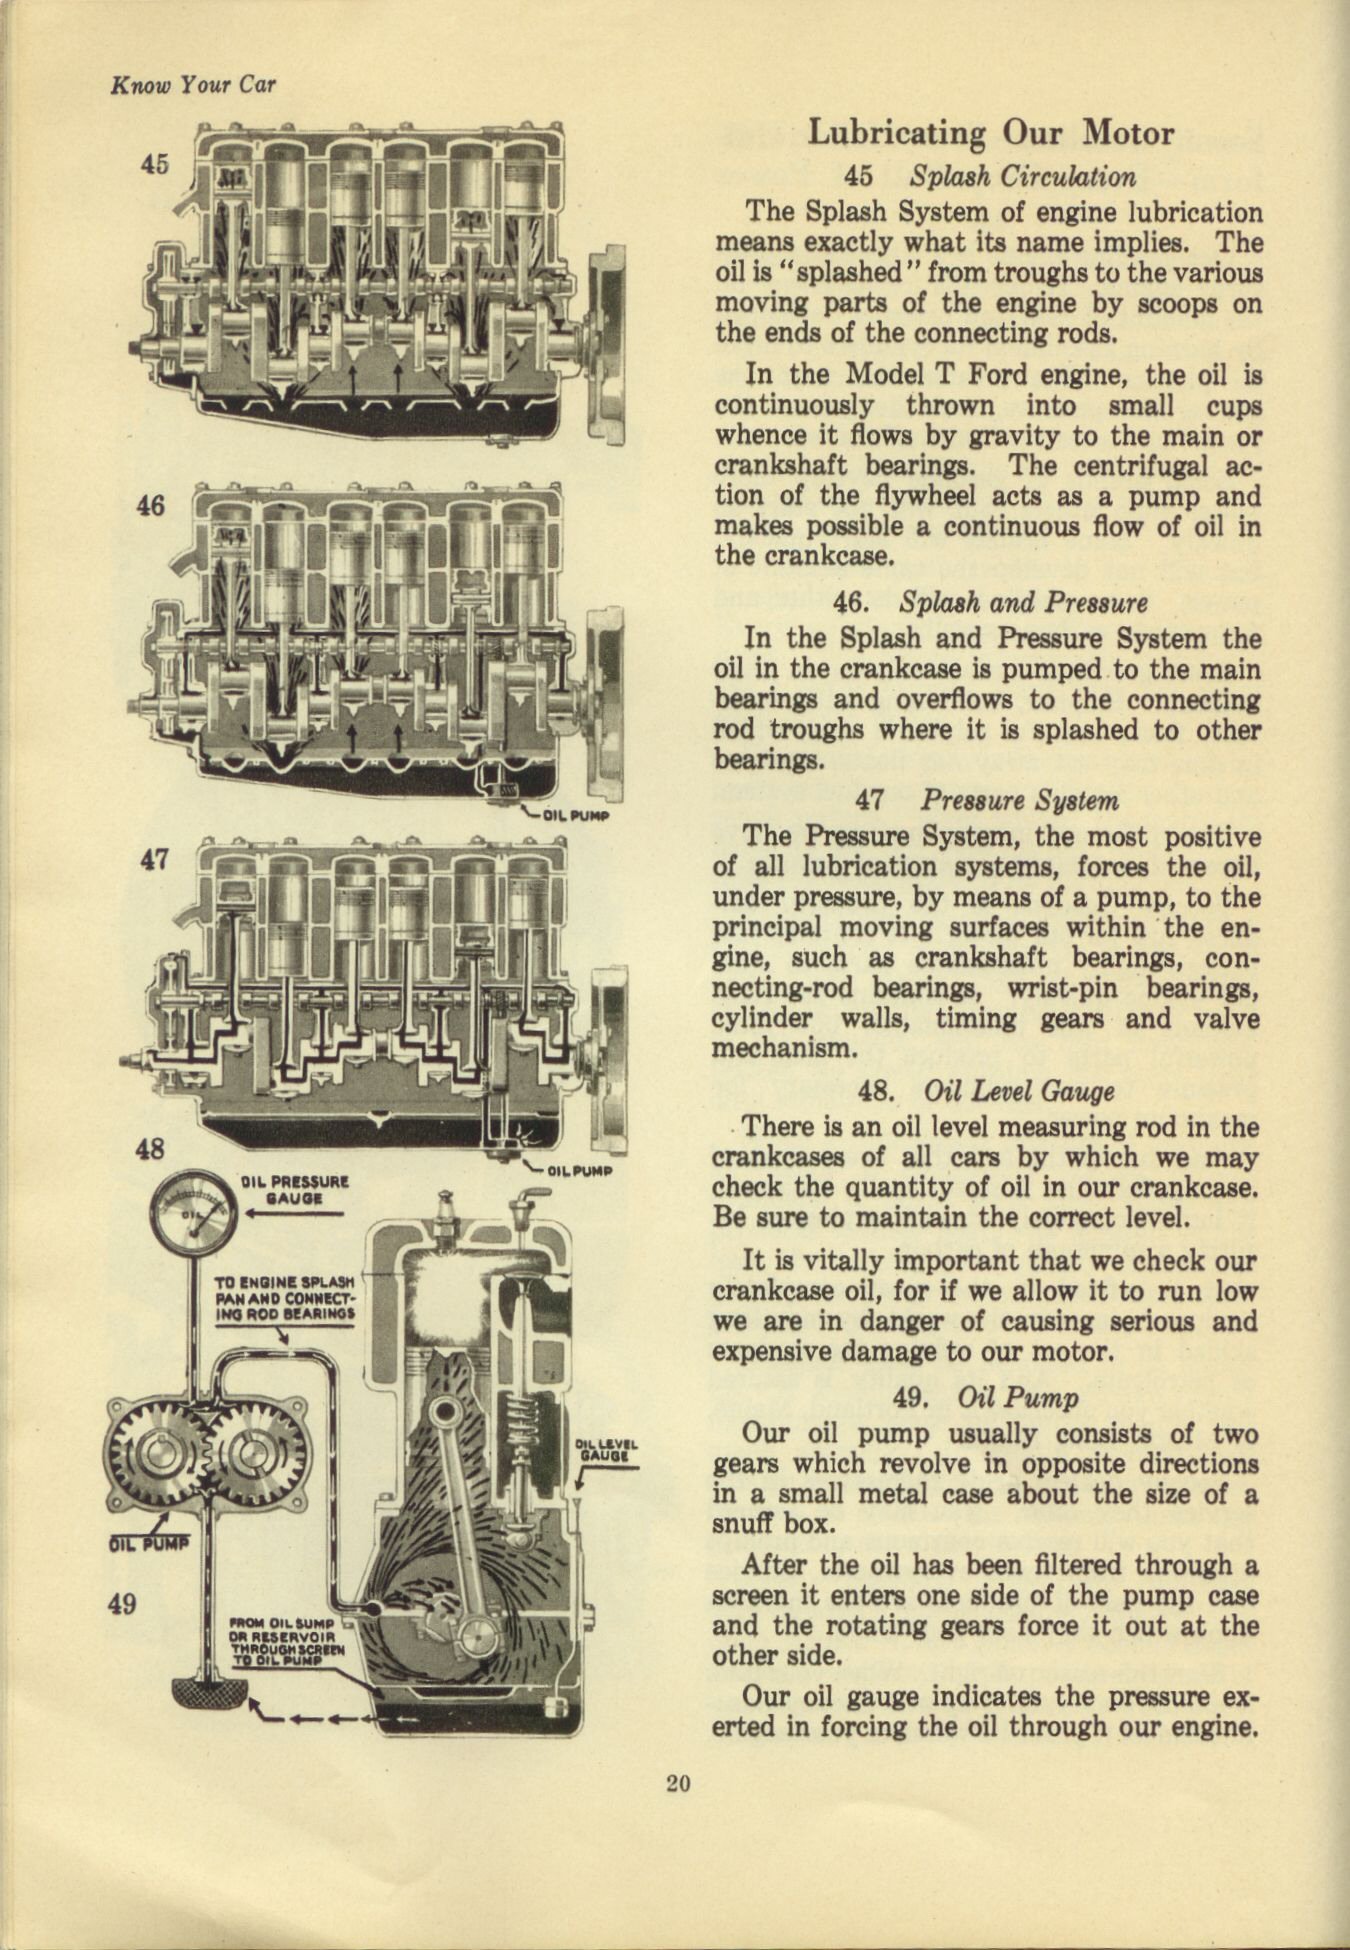 1928 Know Your Car Handbook Page 15